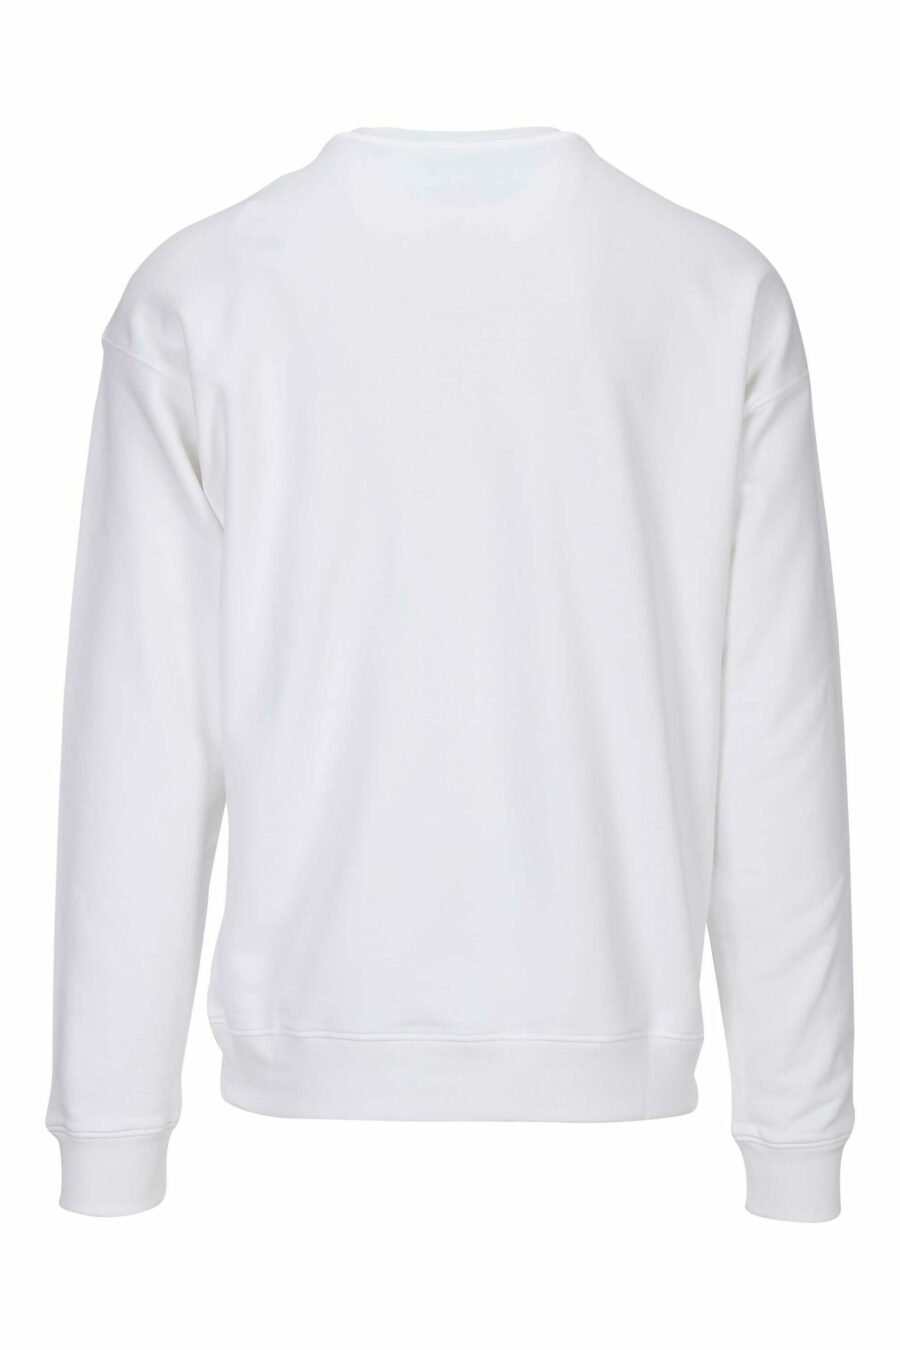 White sweatshirt with monochrome dotted bear maxilogo - 667113458137 1 scaled